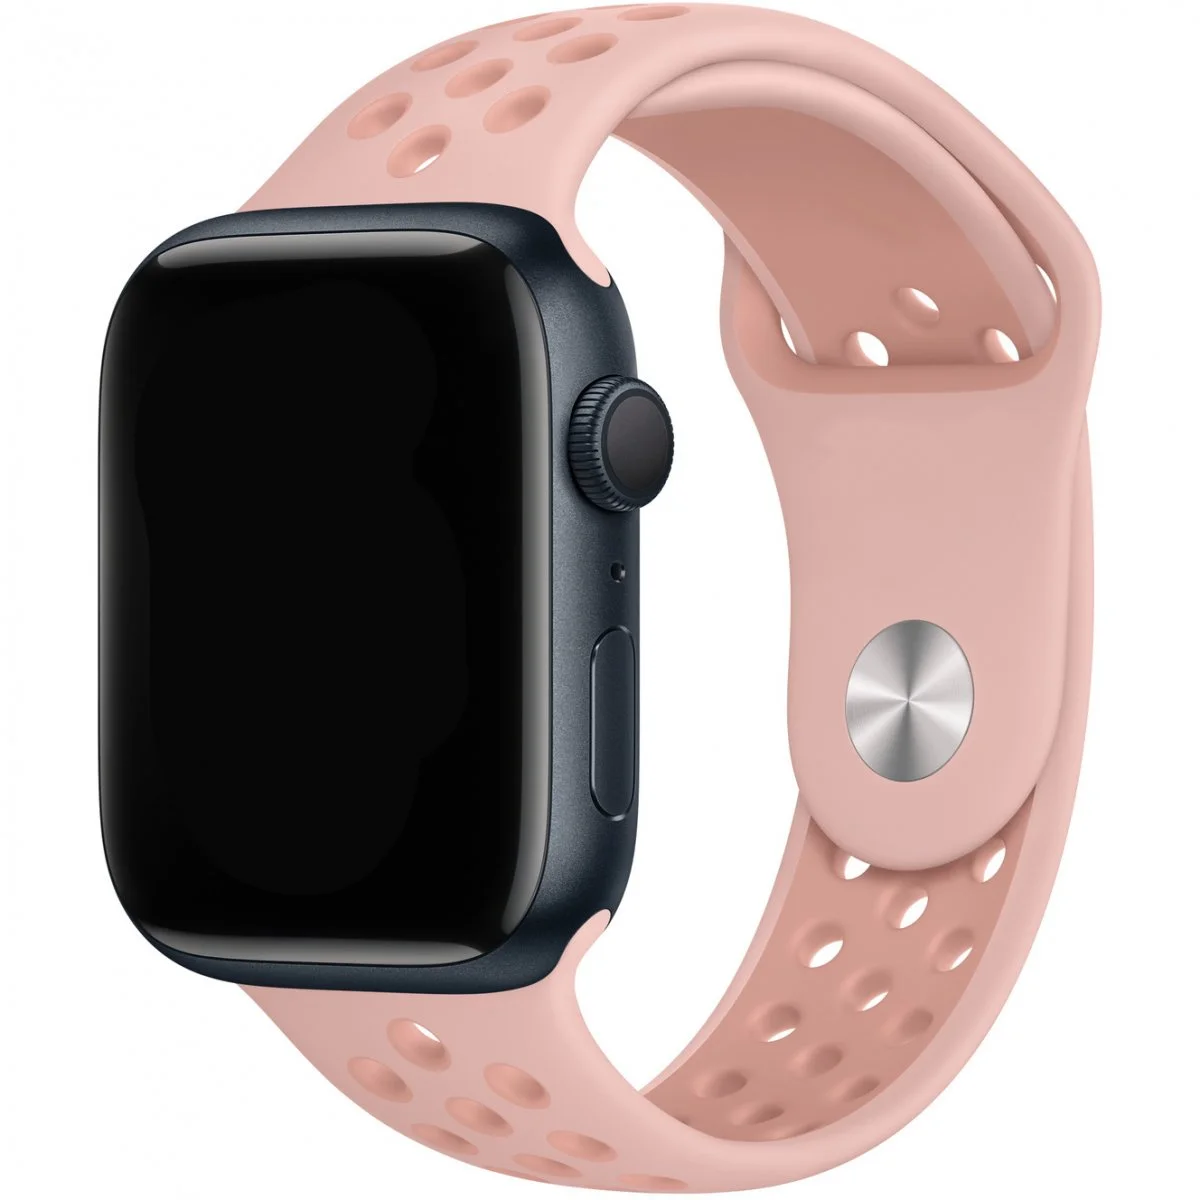 Řemínek iMore SPORT pro Apple Watch Series 1/2/3 (38mm) - Pink Oxford/Rose Whisper